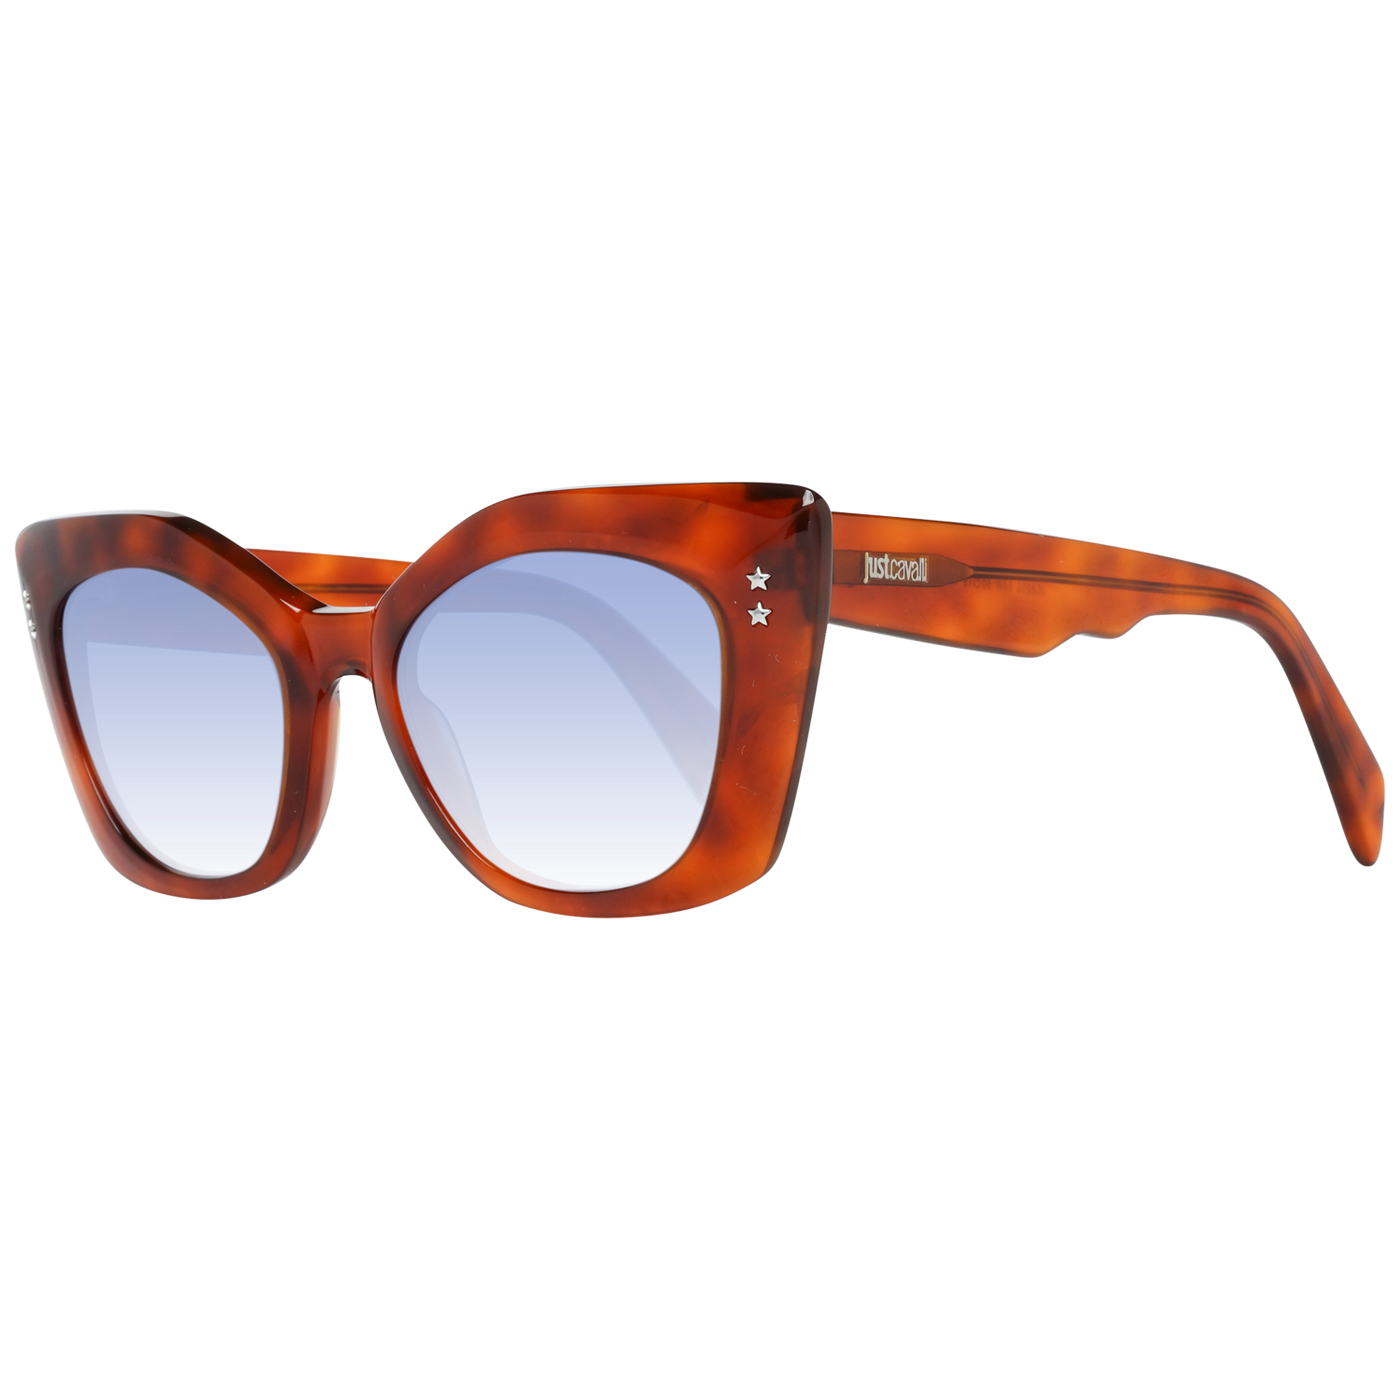 Just Cavalli Brown Women Sunglasses